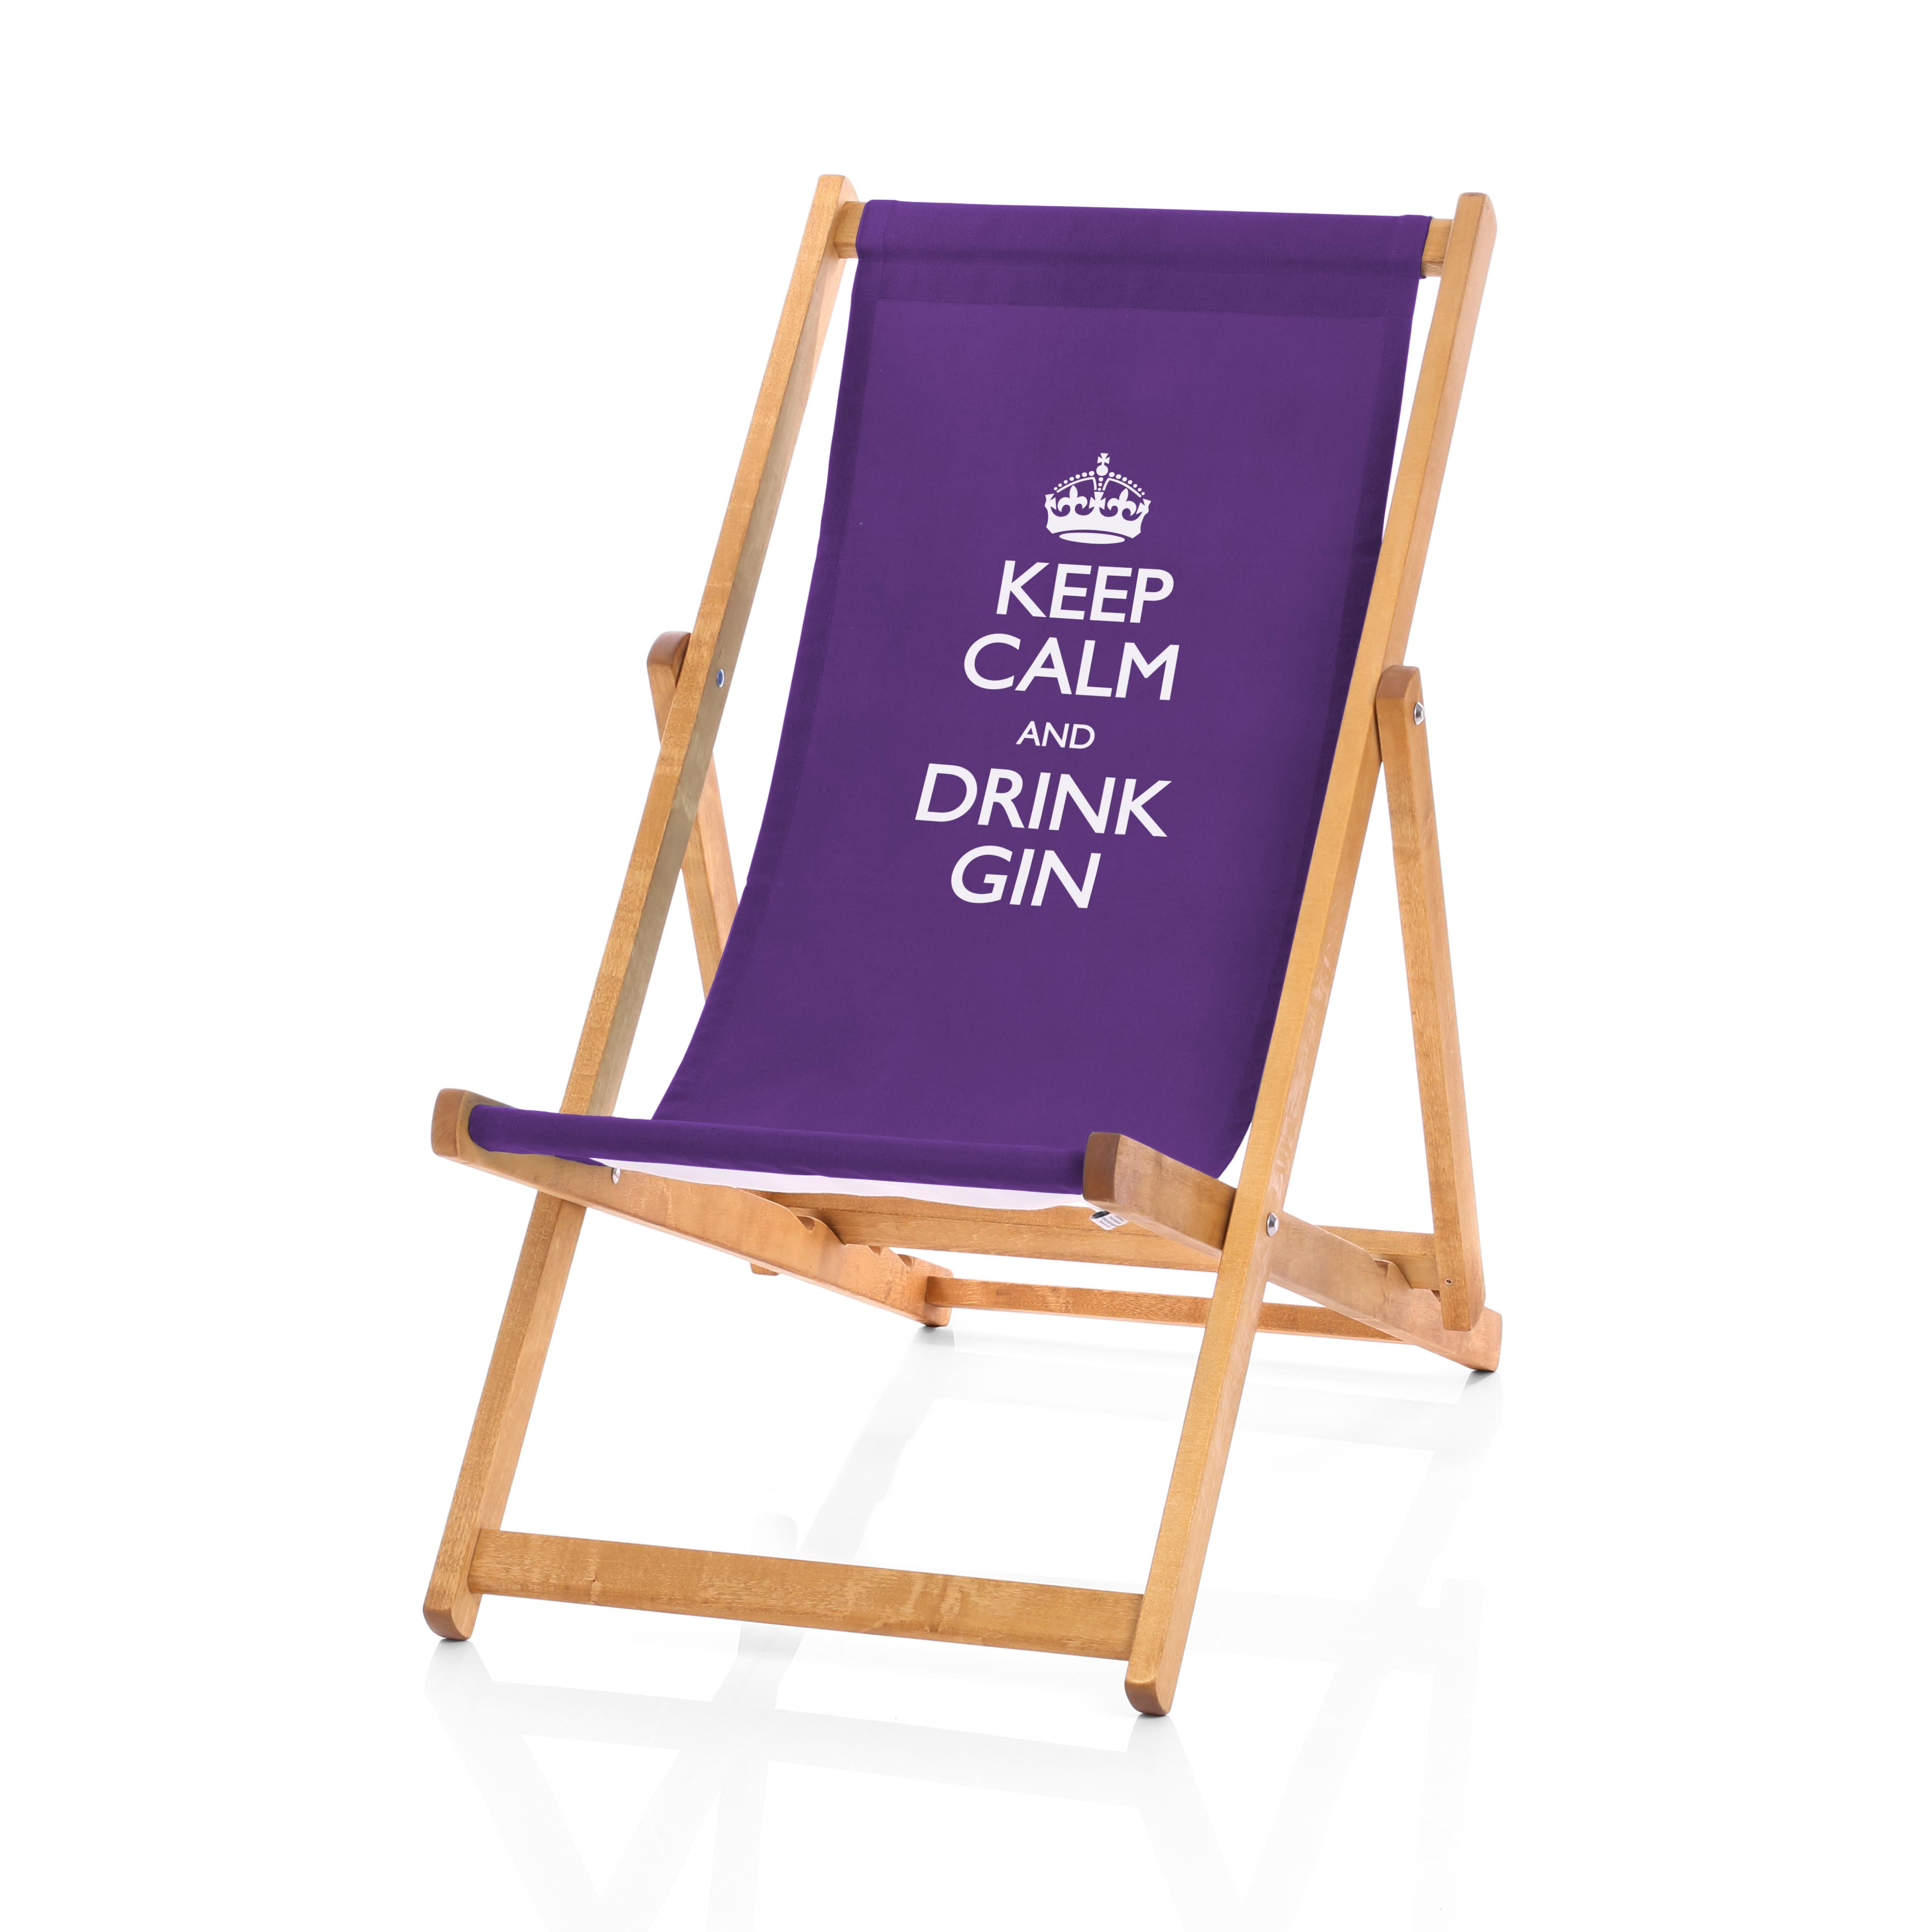 Hardwood Deckchairs - Keep Calm and Drink Gin